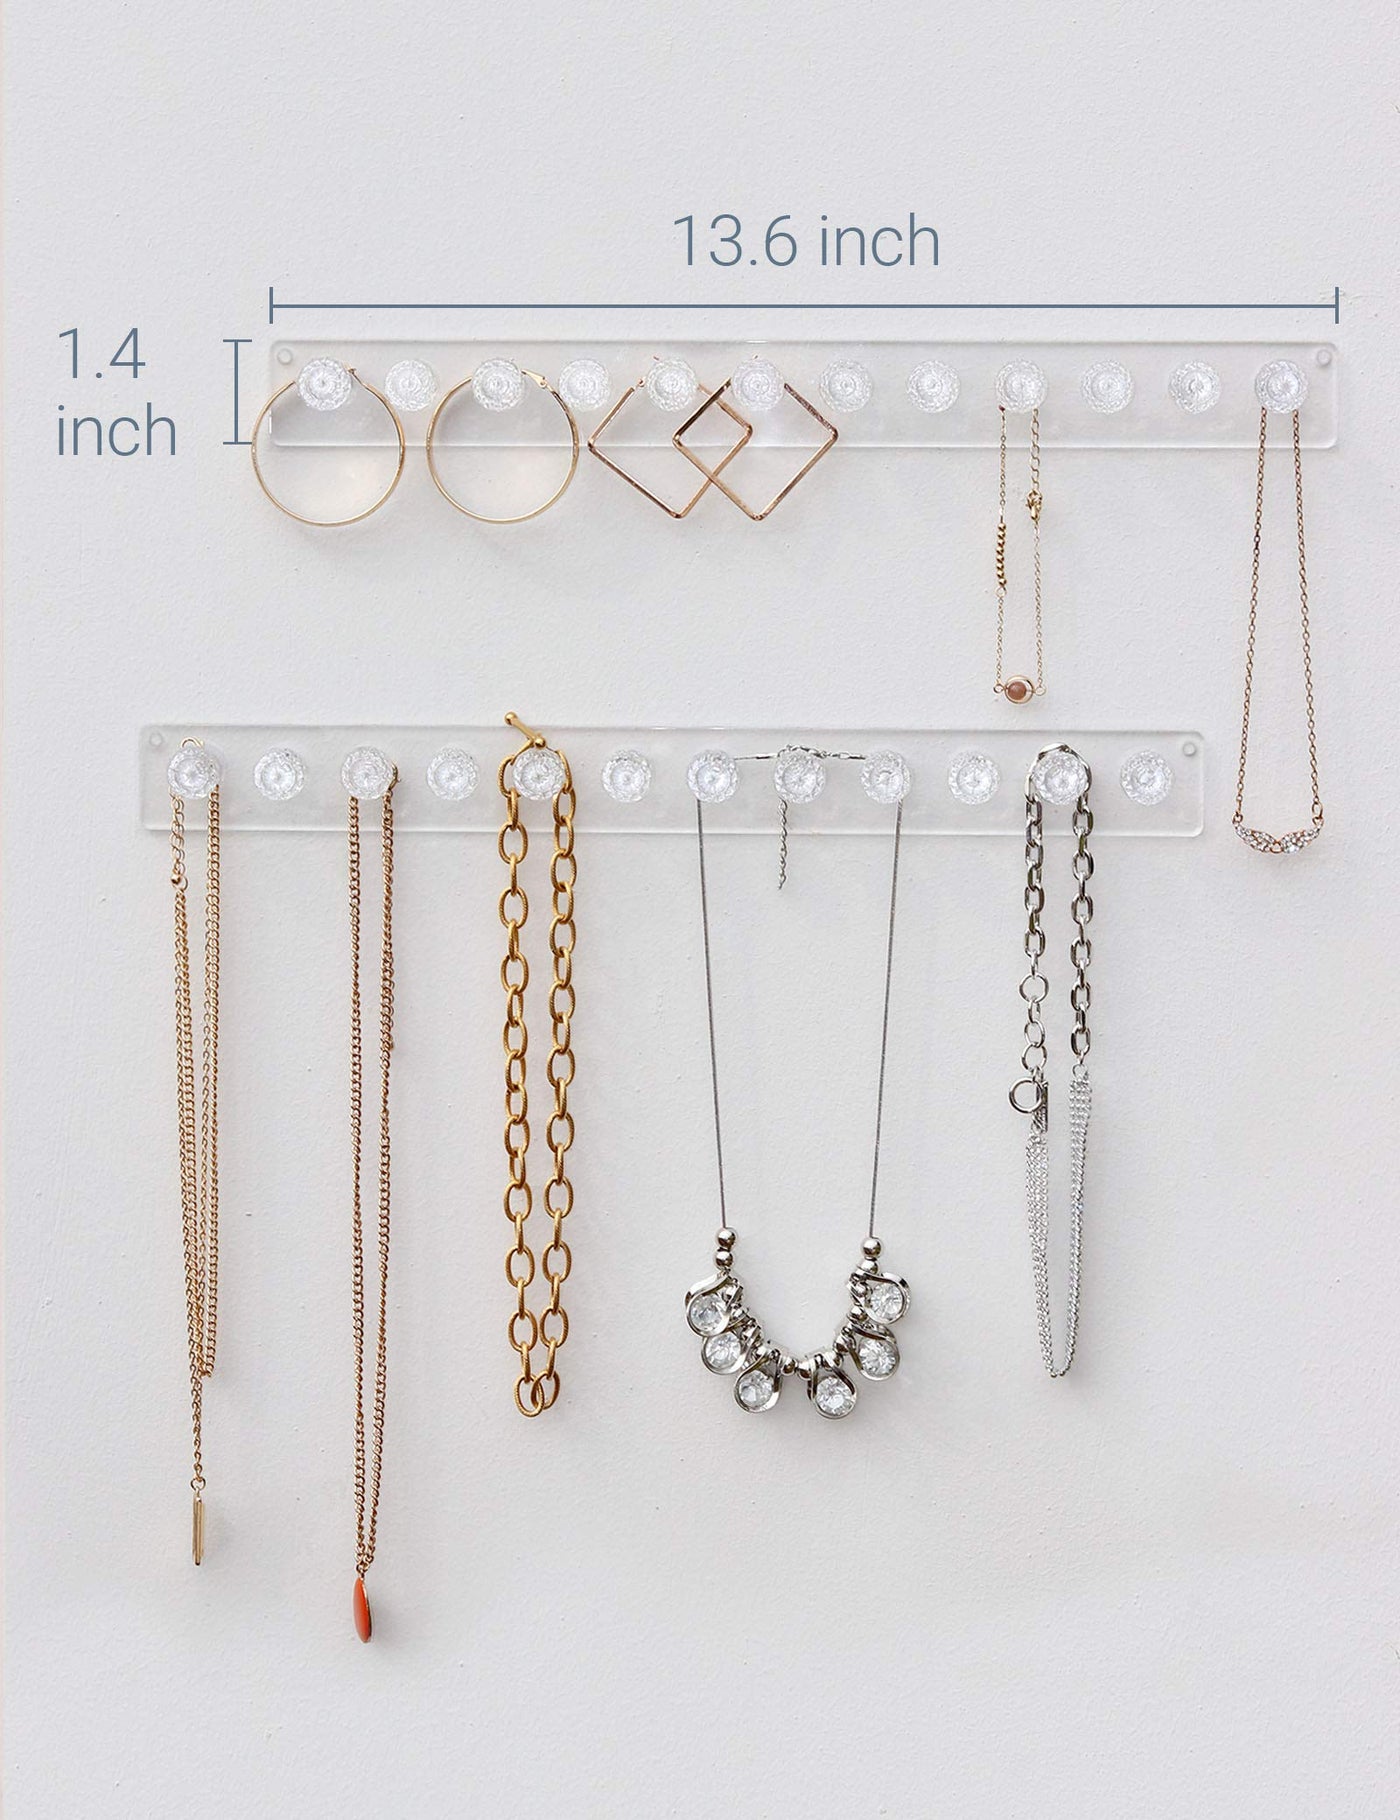 Heesch Necklace Hanger, Acrylic Necklace Organizer Wall Mount